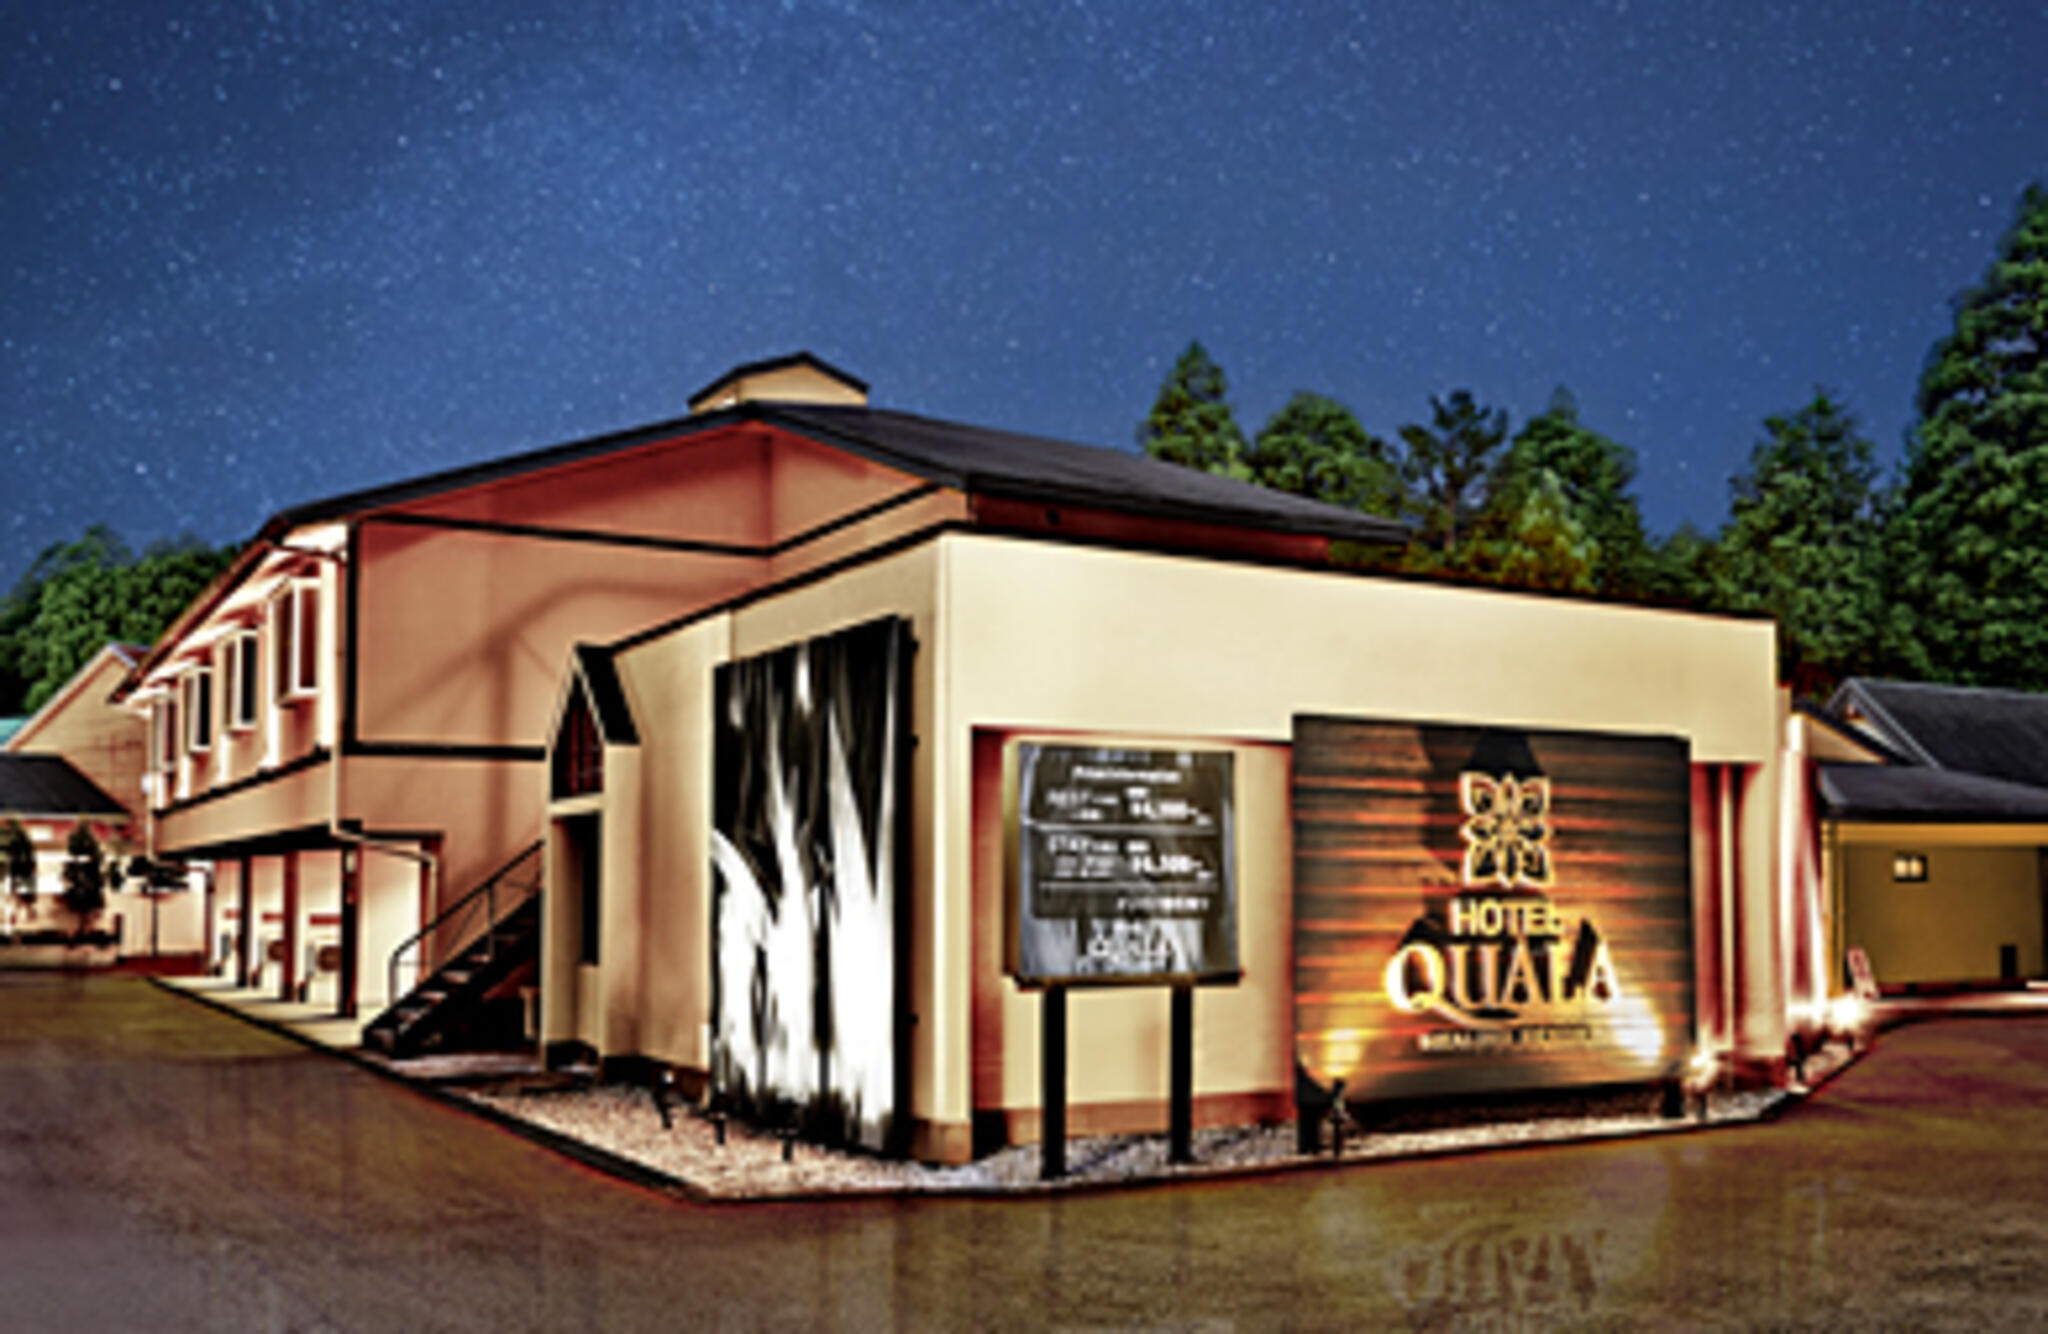 Hotel QUALAの代表写真3